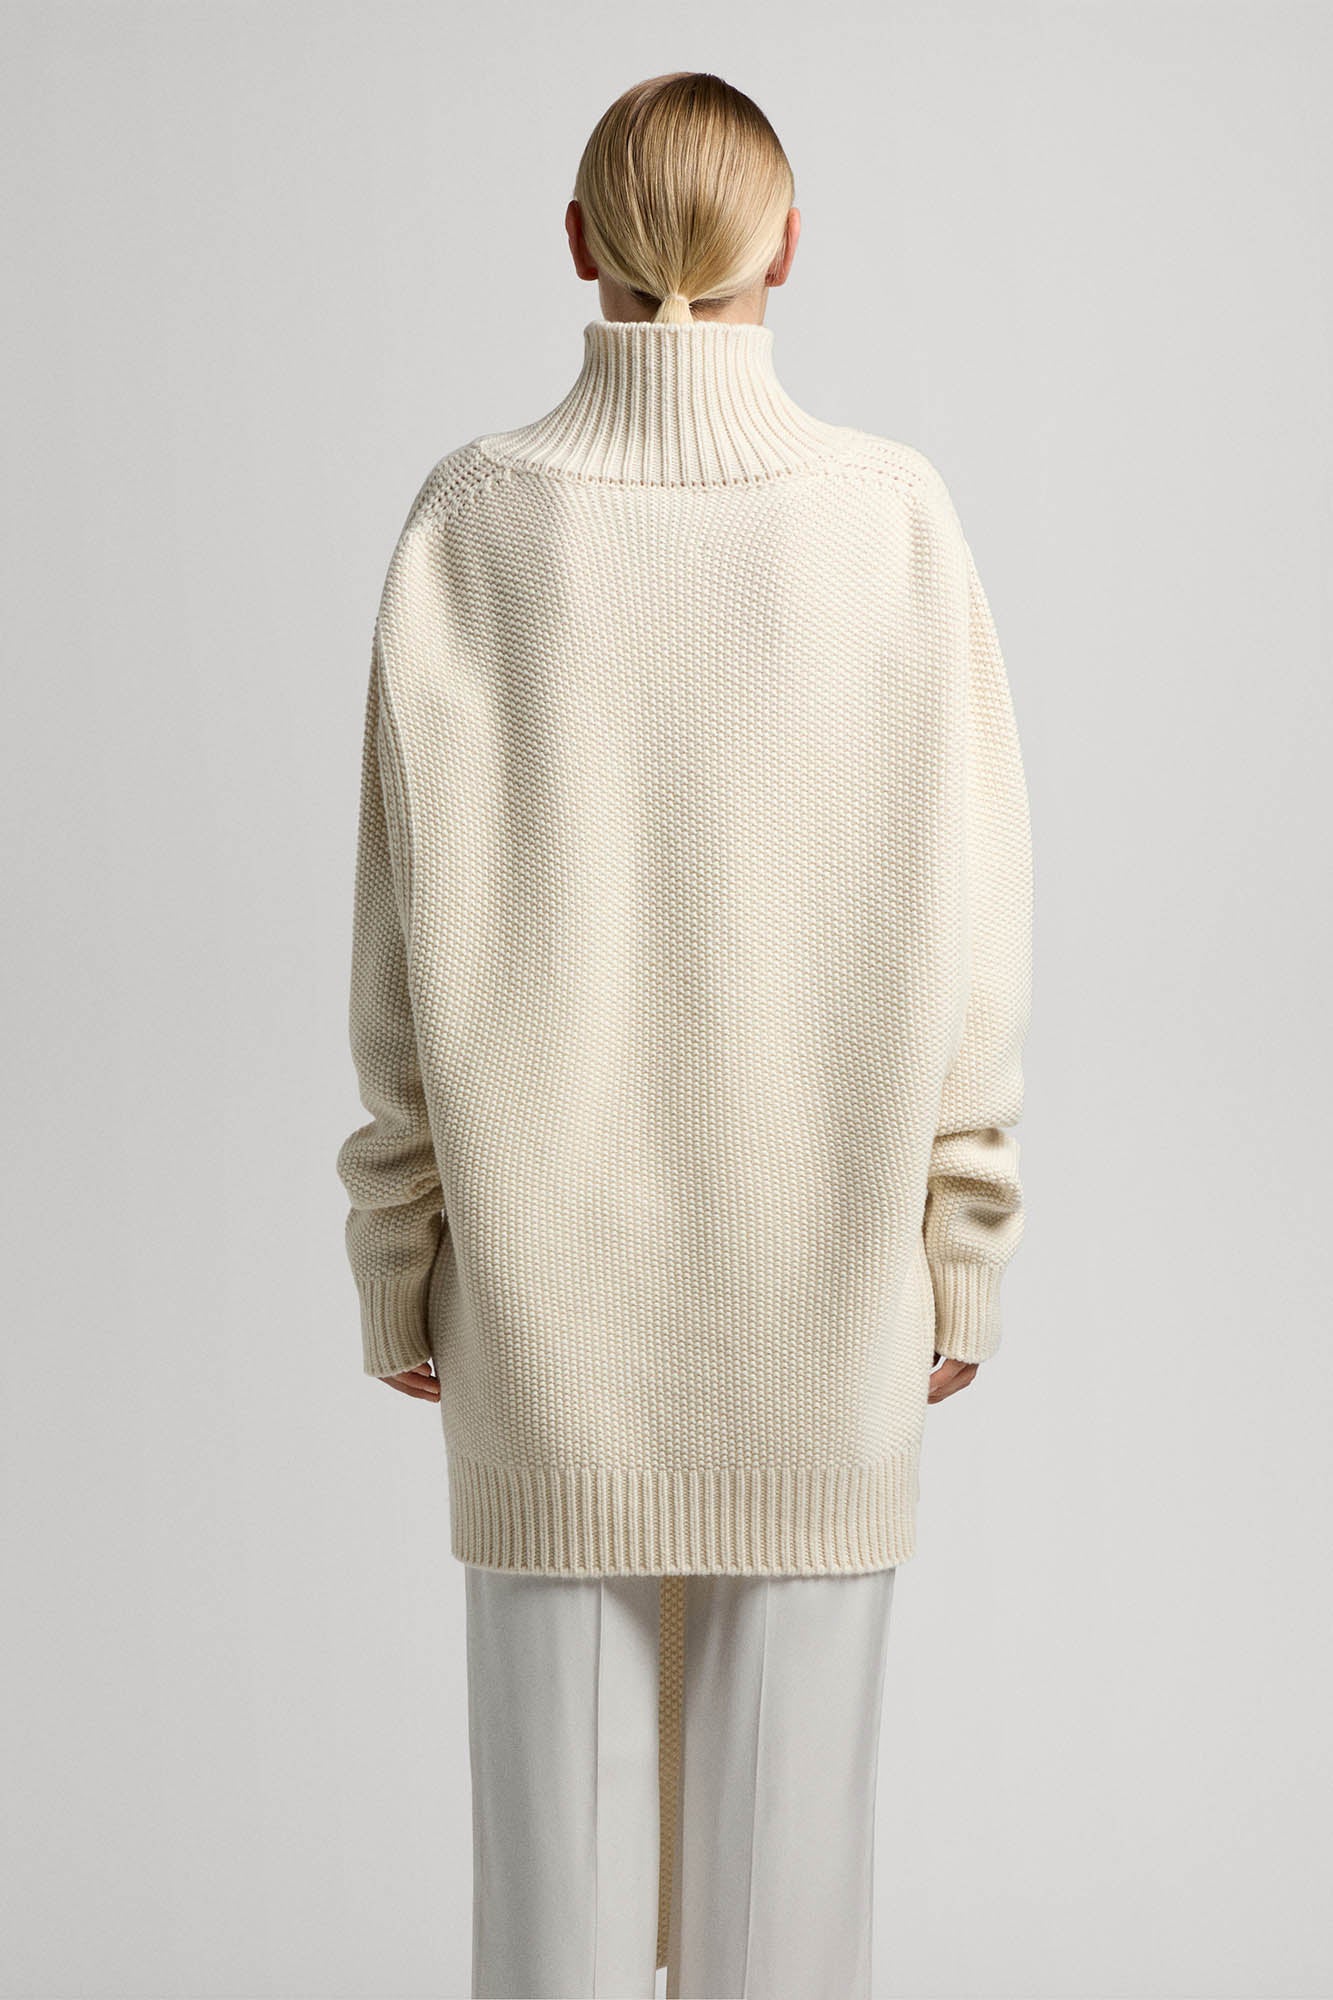 Belted turtleneck cashmere sweater dress